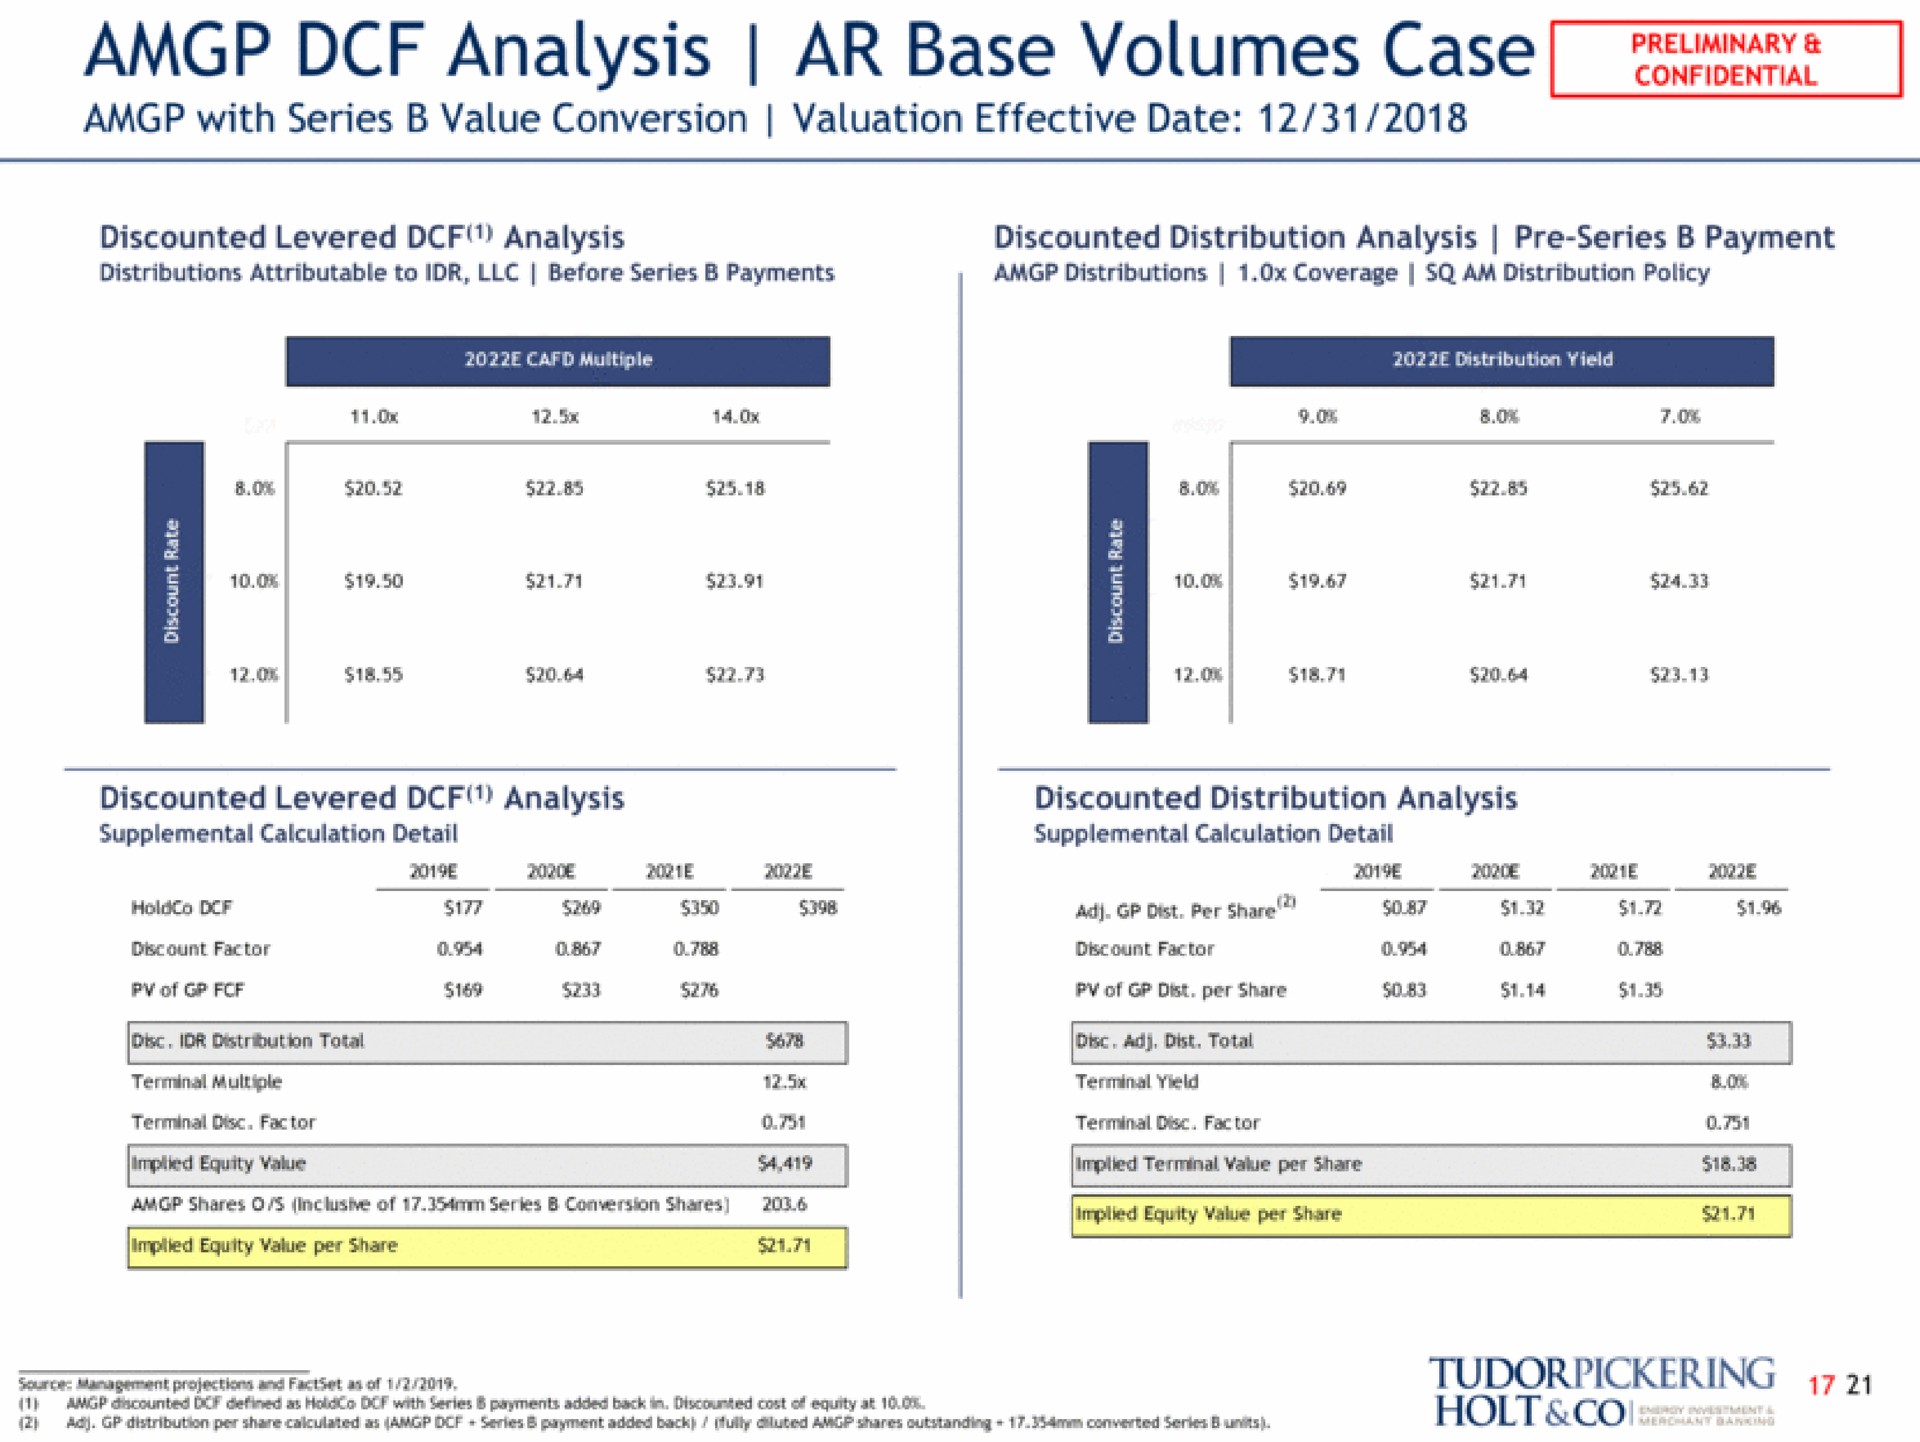 analysis base volumes case son | Tudor, Pickering, Holt & Co